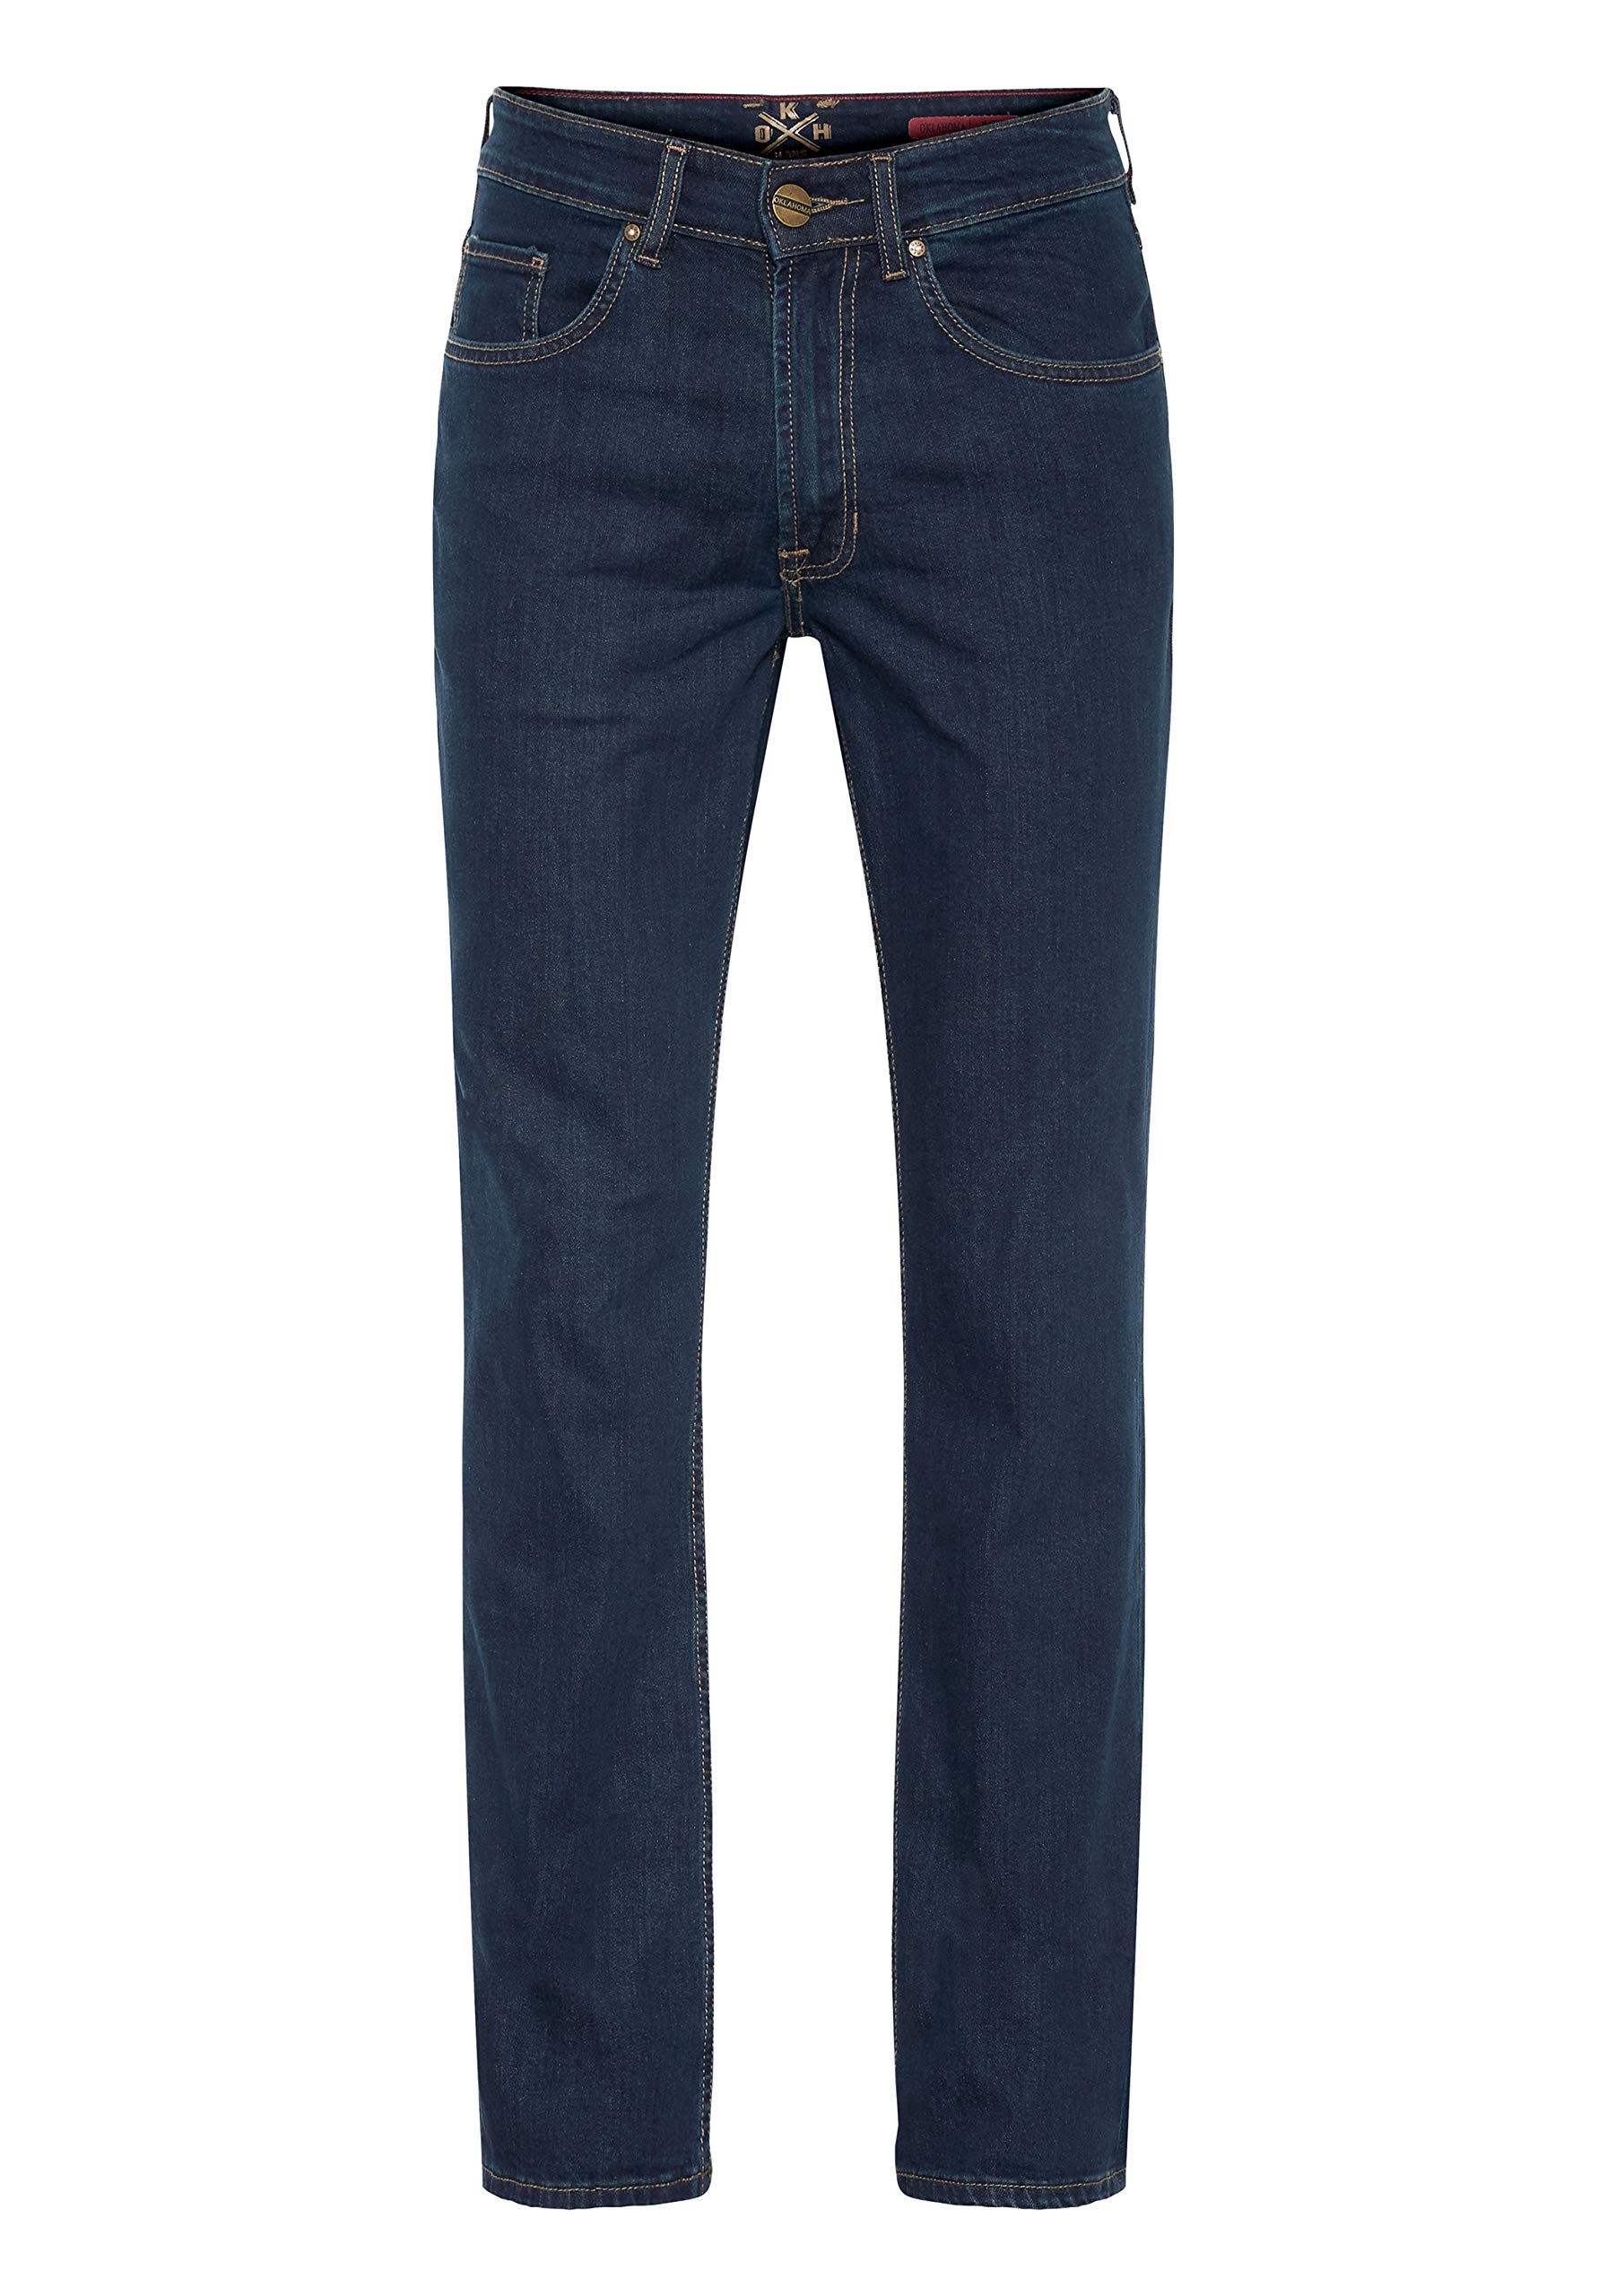 Oklahoma Jeans Herren Straight Jeans R140, Blau (Overdyed 004), W36/L34